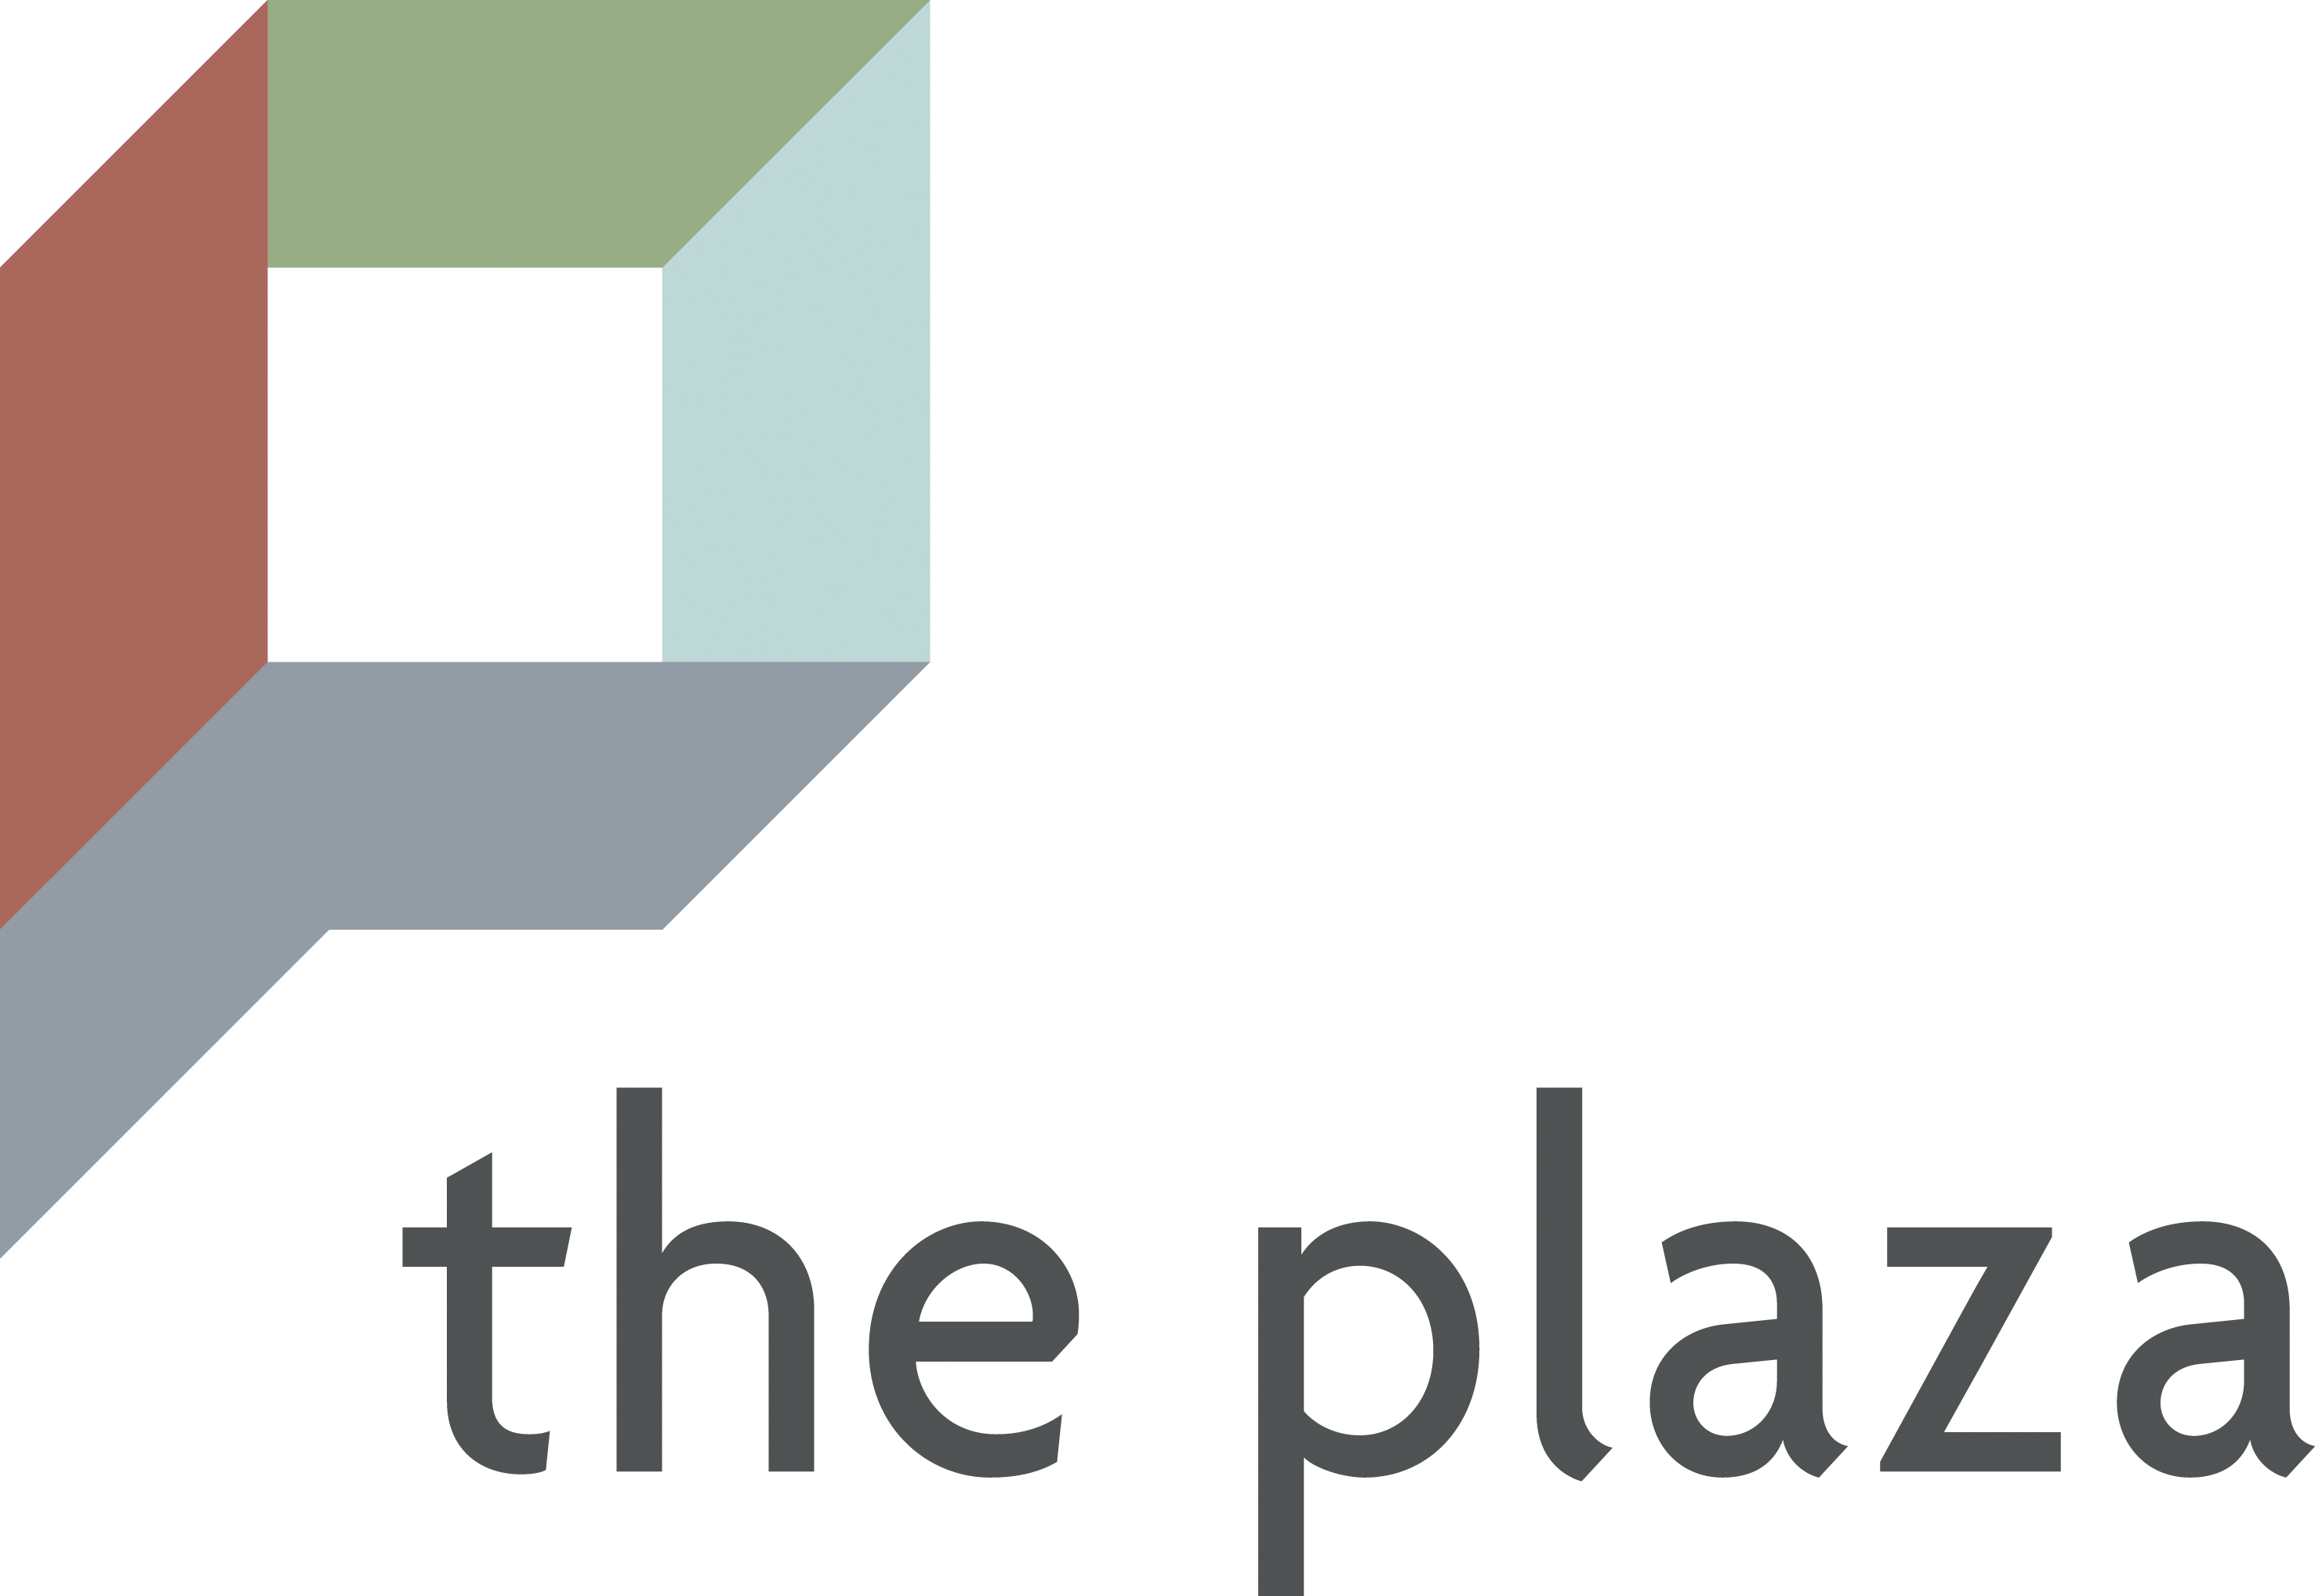 The Plaza logo